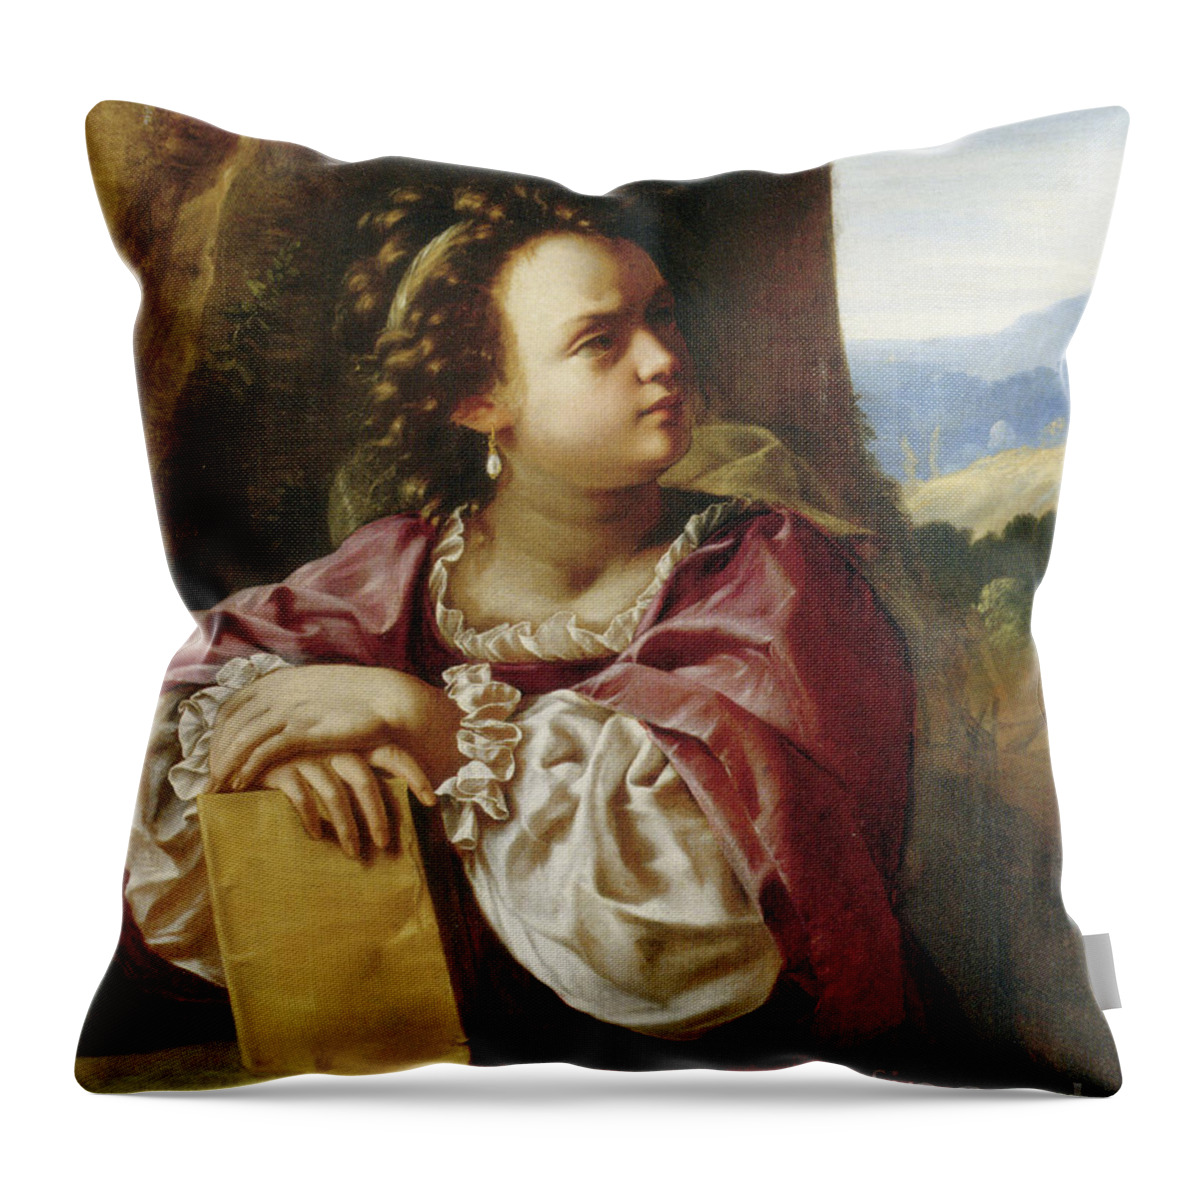 Gentileschi Throw Pillow featuring the painting Saint Catherine of Alexandria by Artemisia Gentileschi